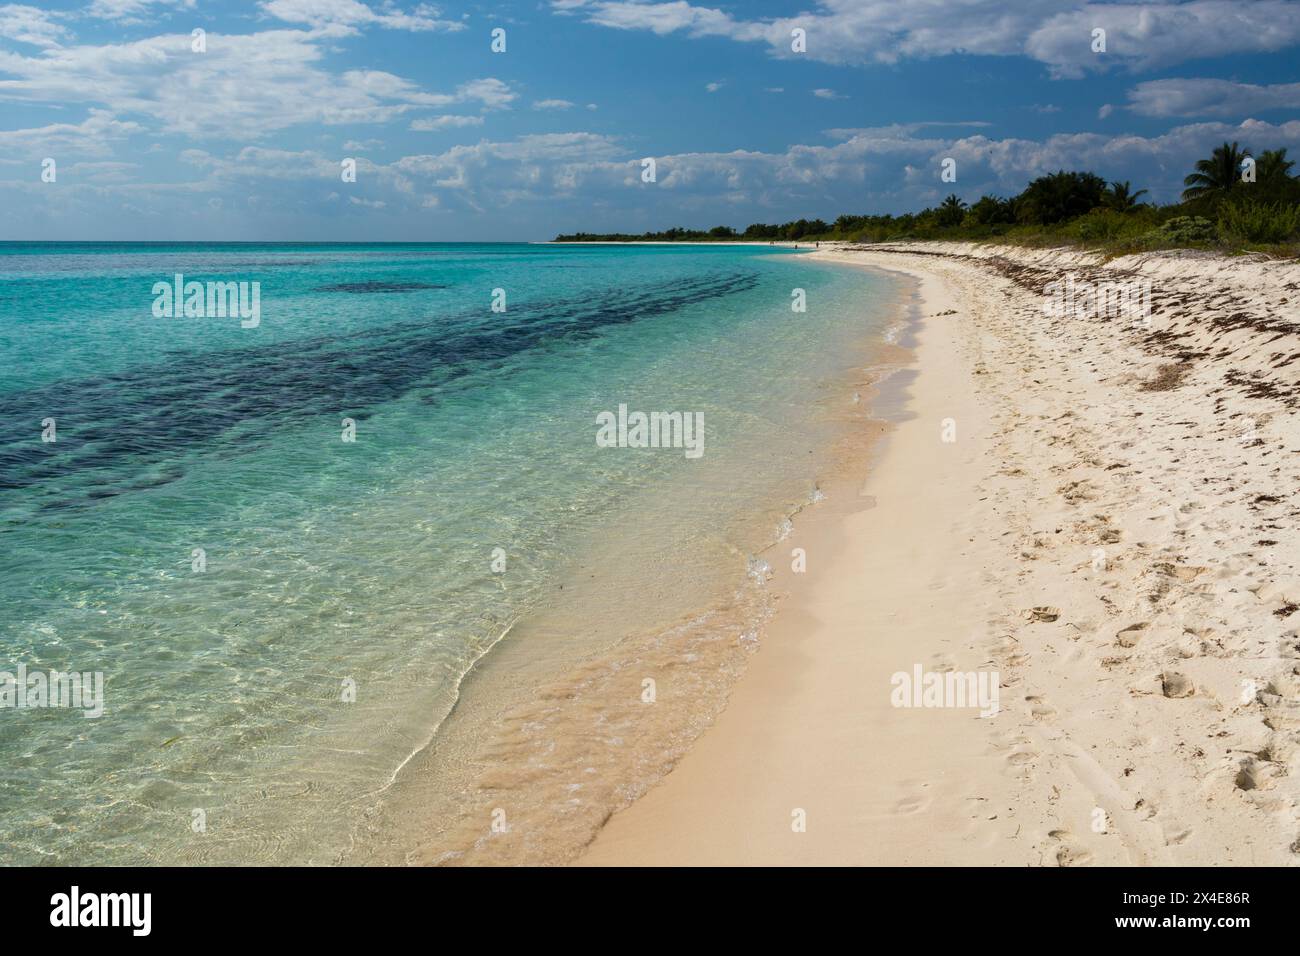 A sandy beach at Punta Sur Eco Park, Cozumel Island, Quintana Roo, Mexico. Stock Photo